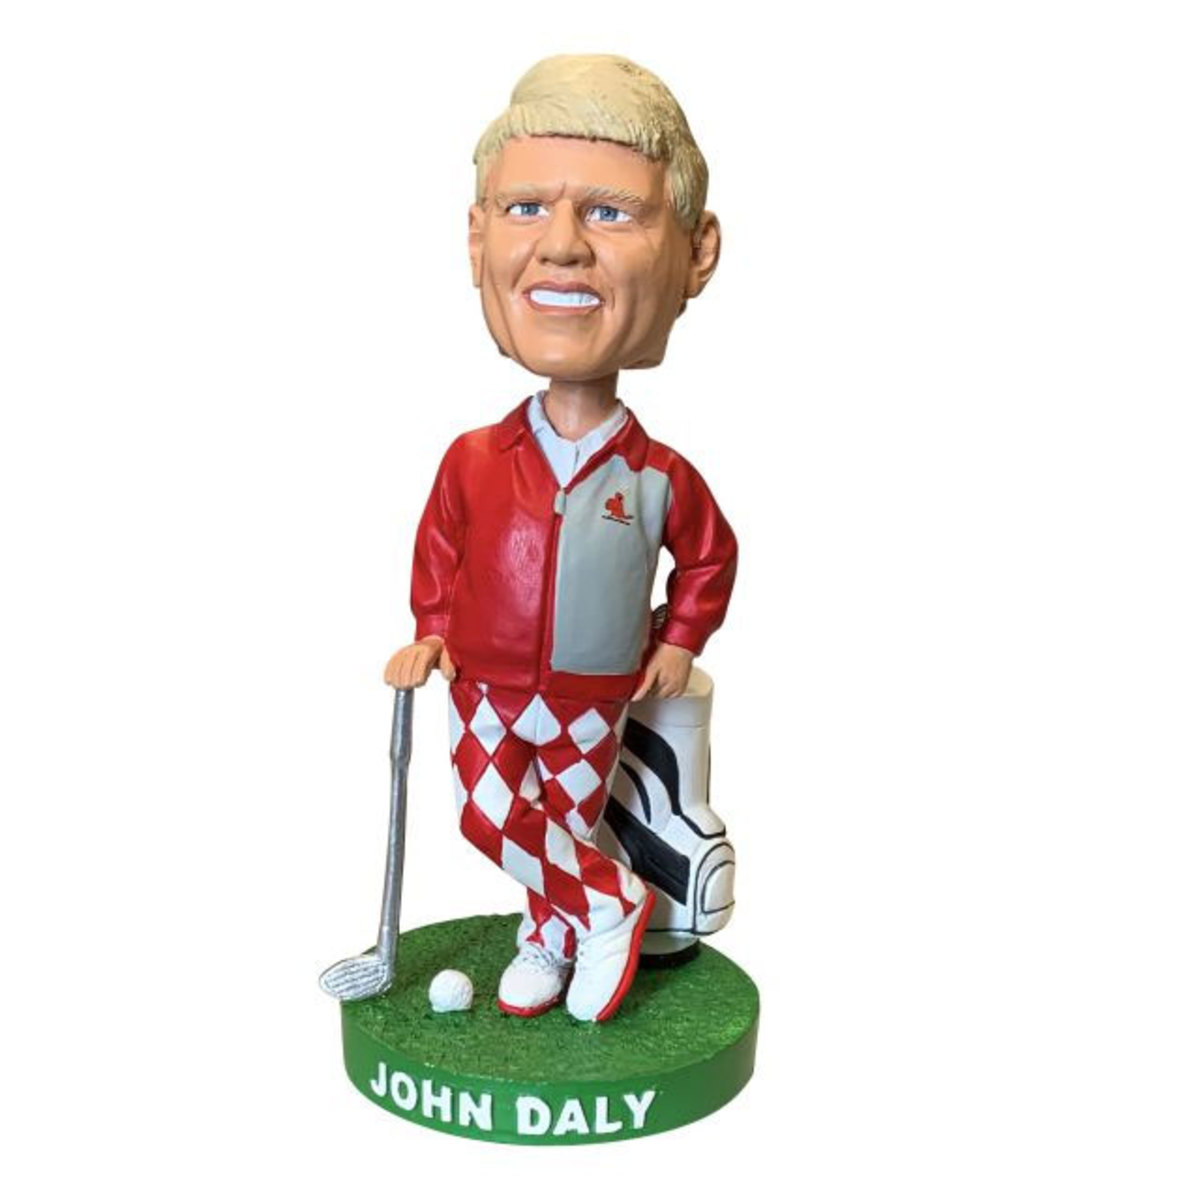 The John Daly bobblehead.